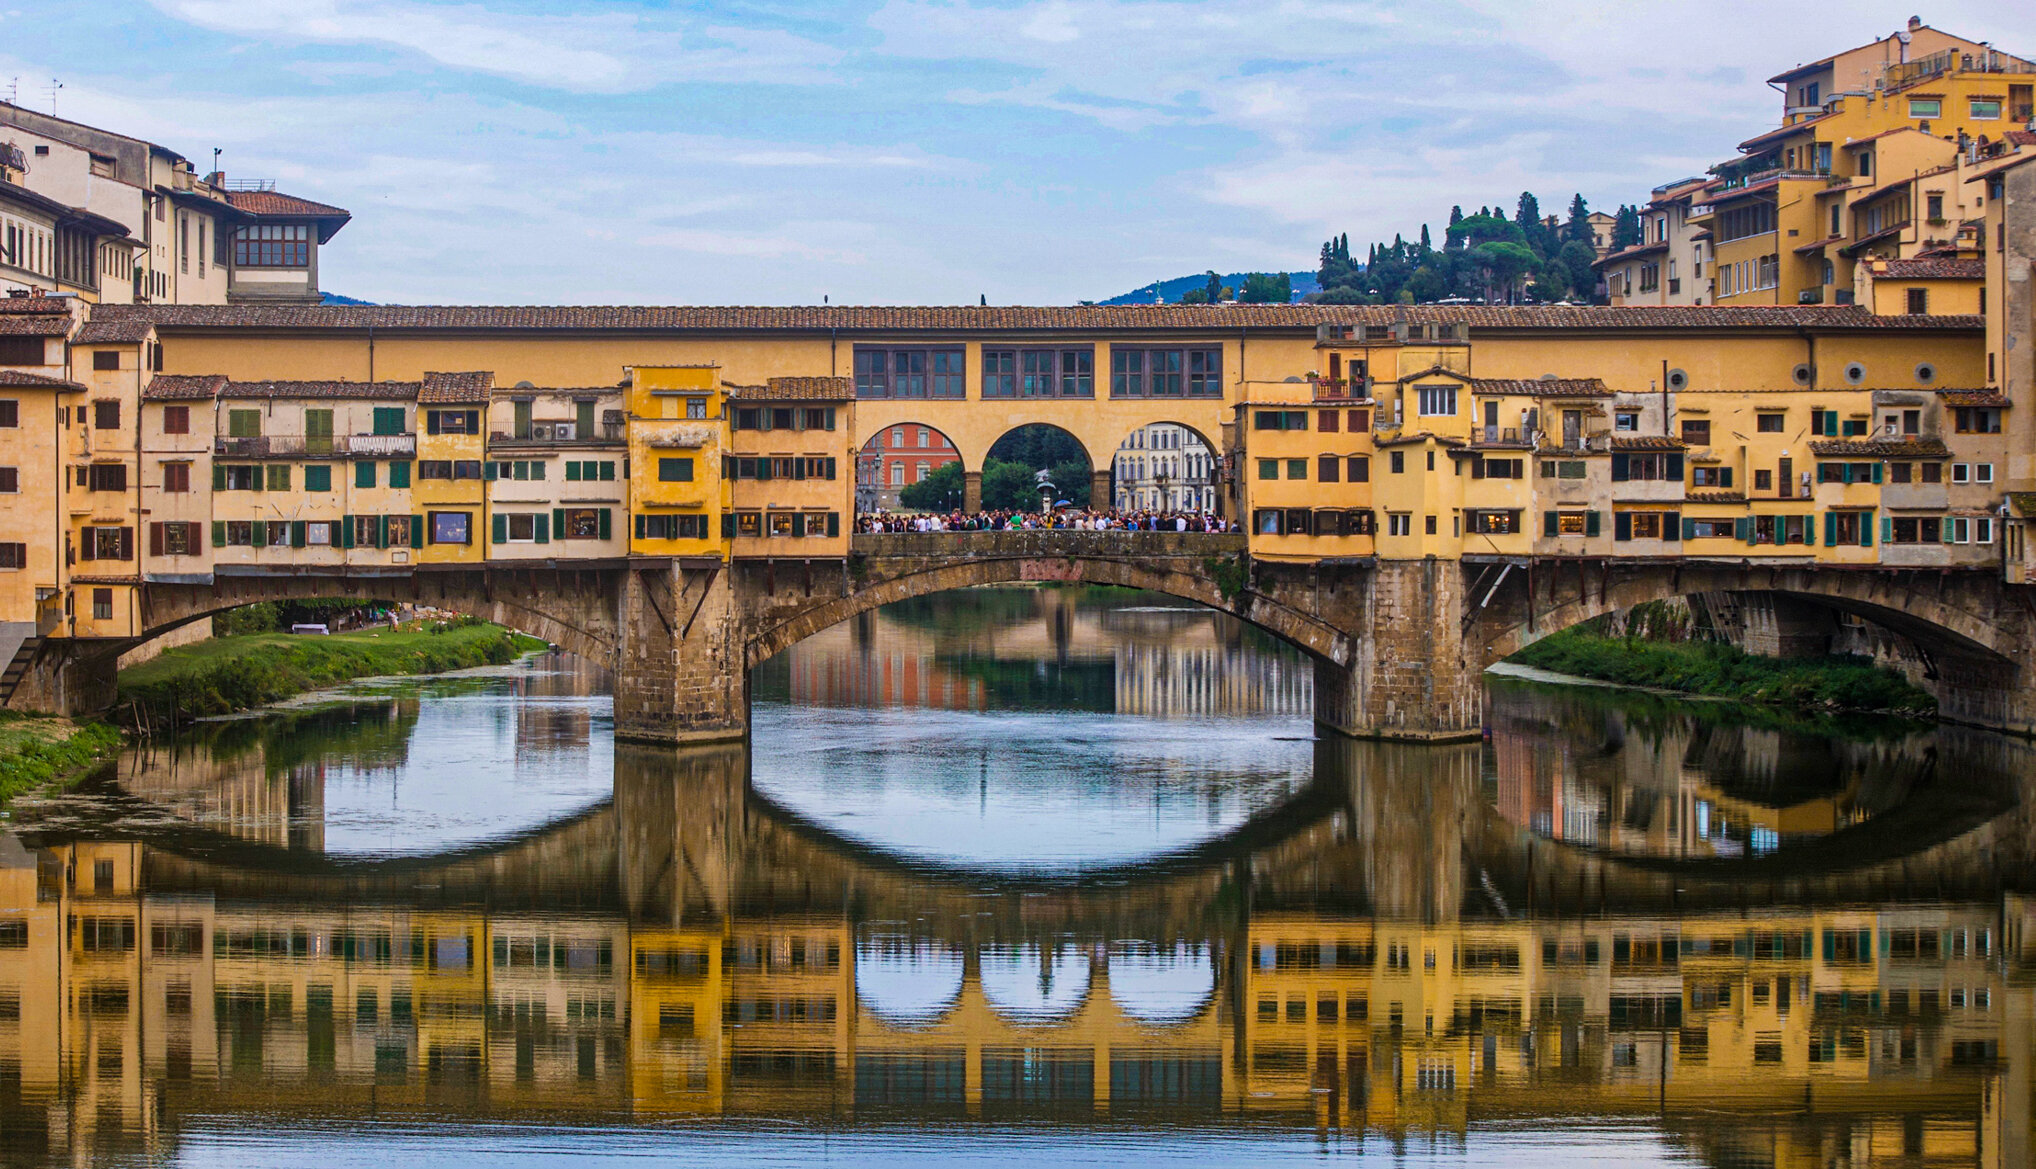 @ Ponte Vecchio_Arno River_Florence.jpg